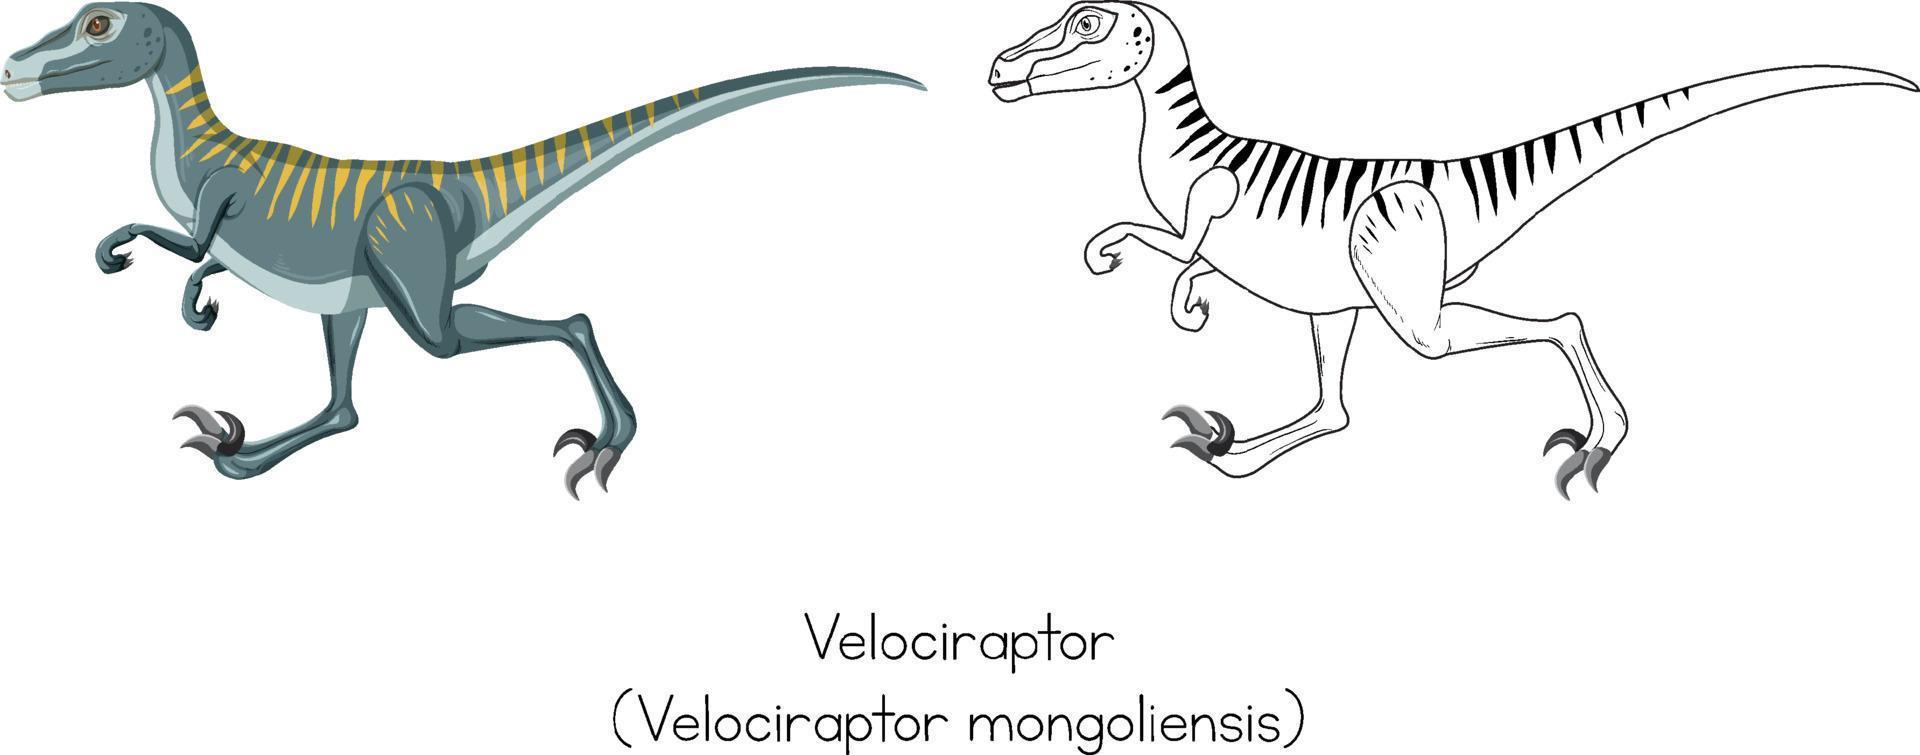 dibujo de dinosaurio de velociraptor vector